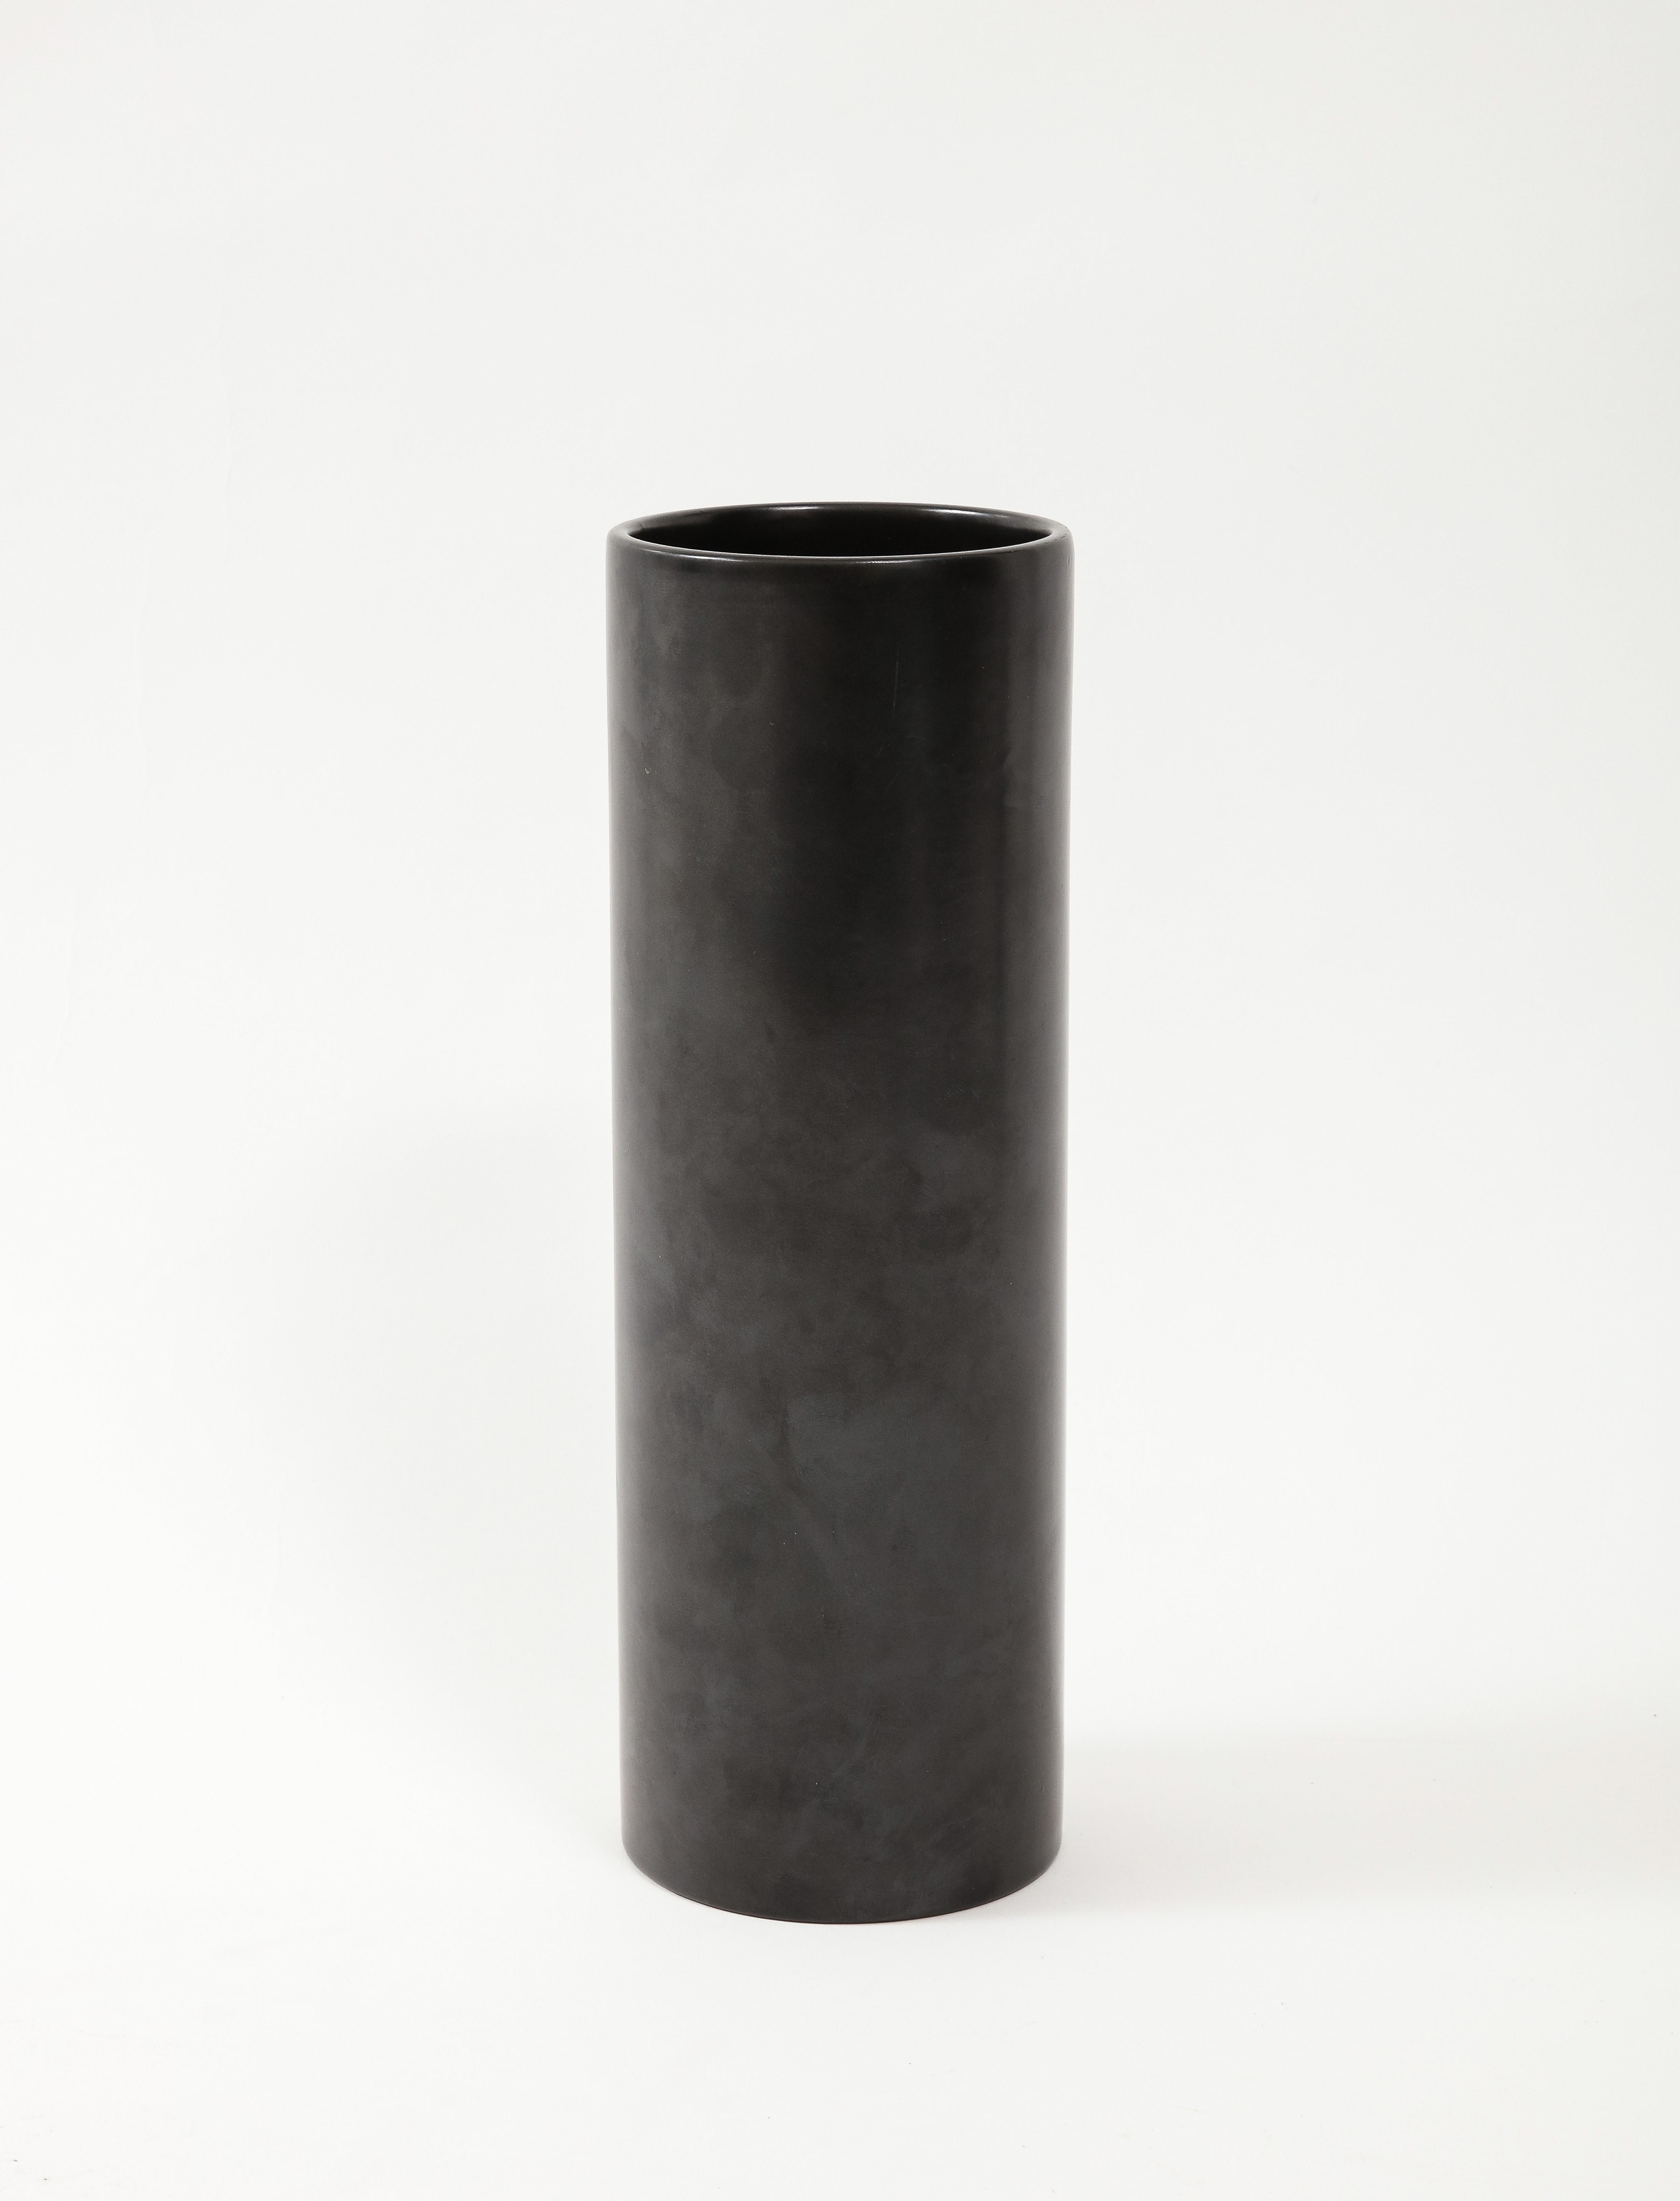 French Large Georges Jouve Style Black Matte Cylinder Vase, France, c. 1950's